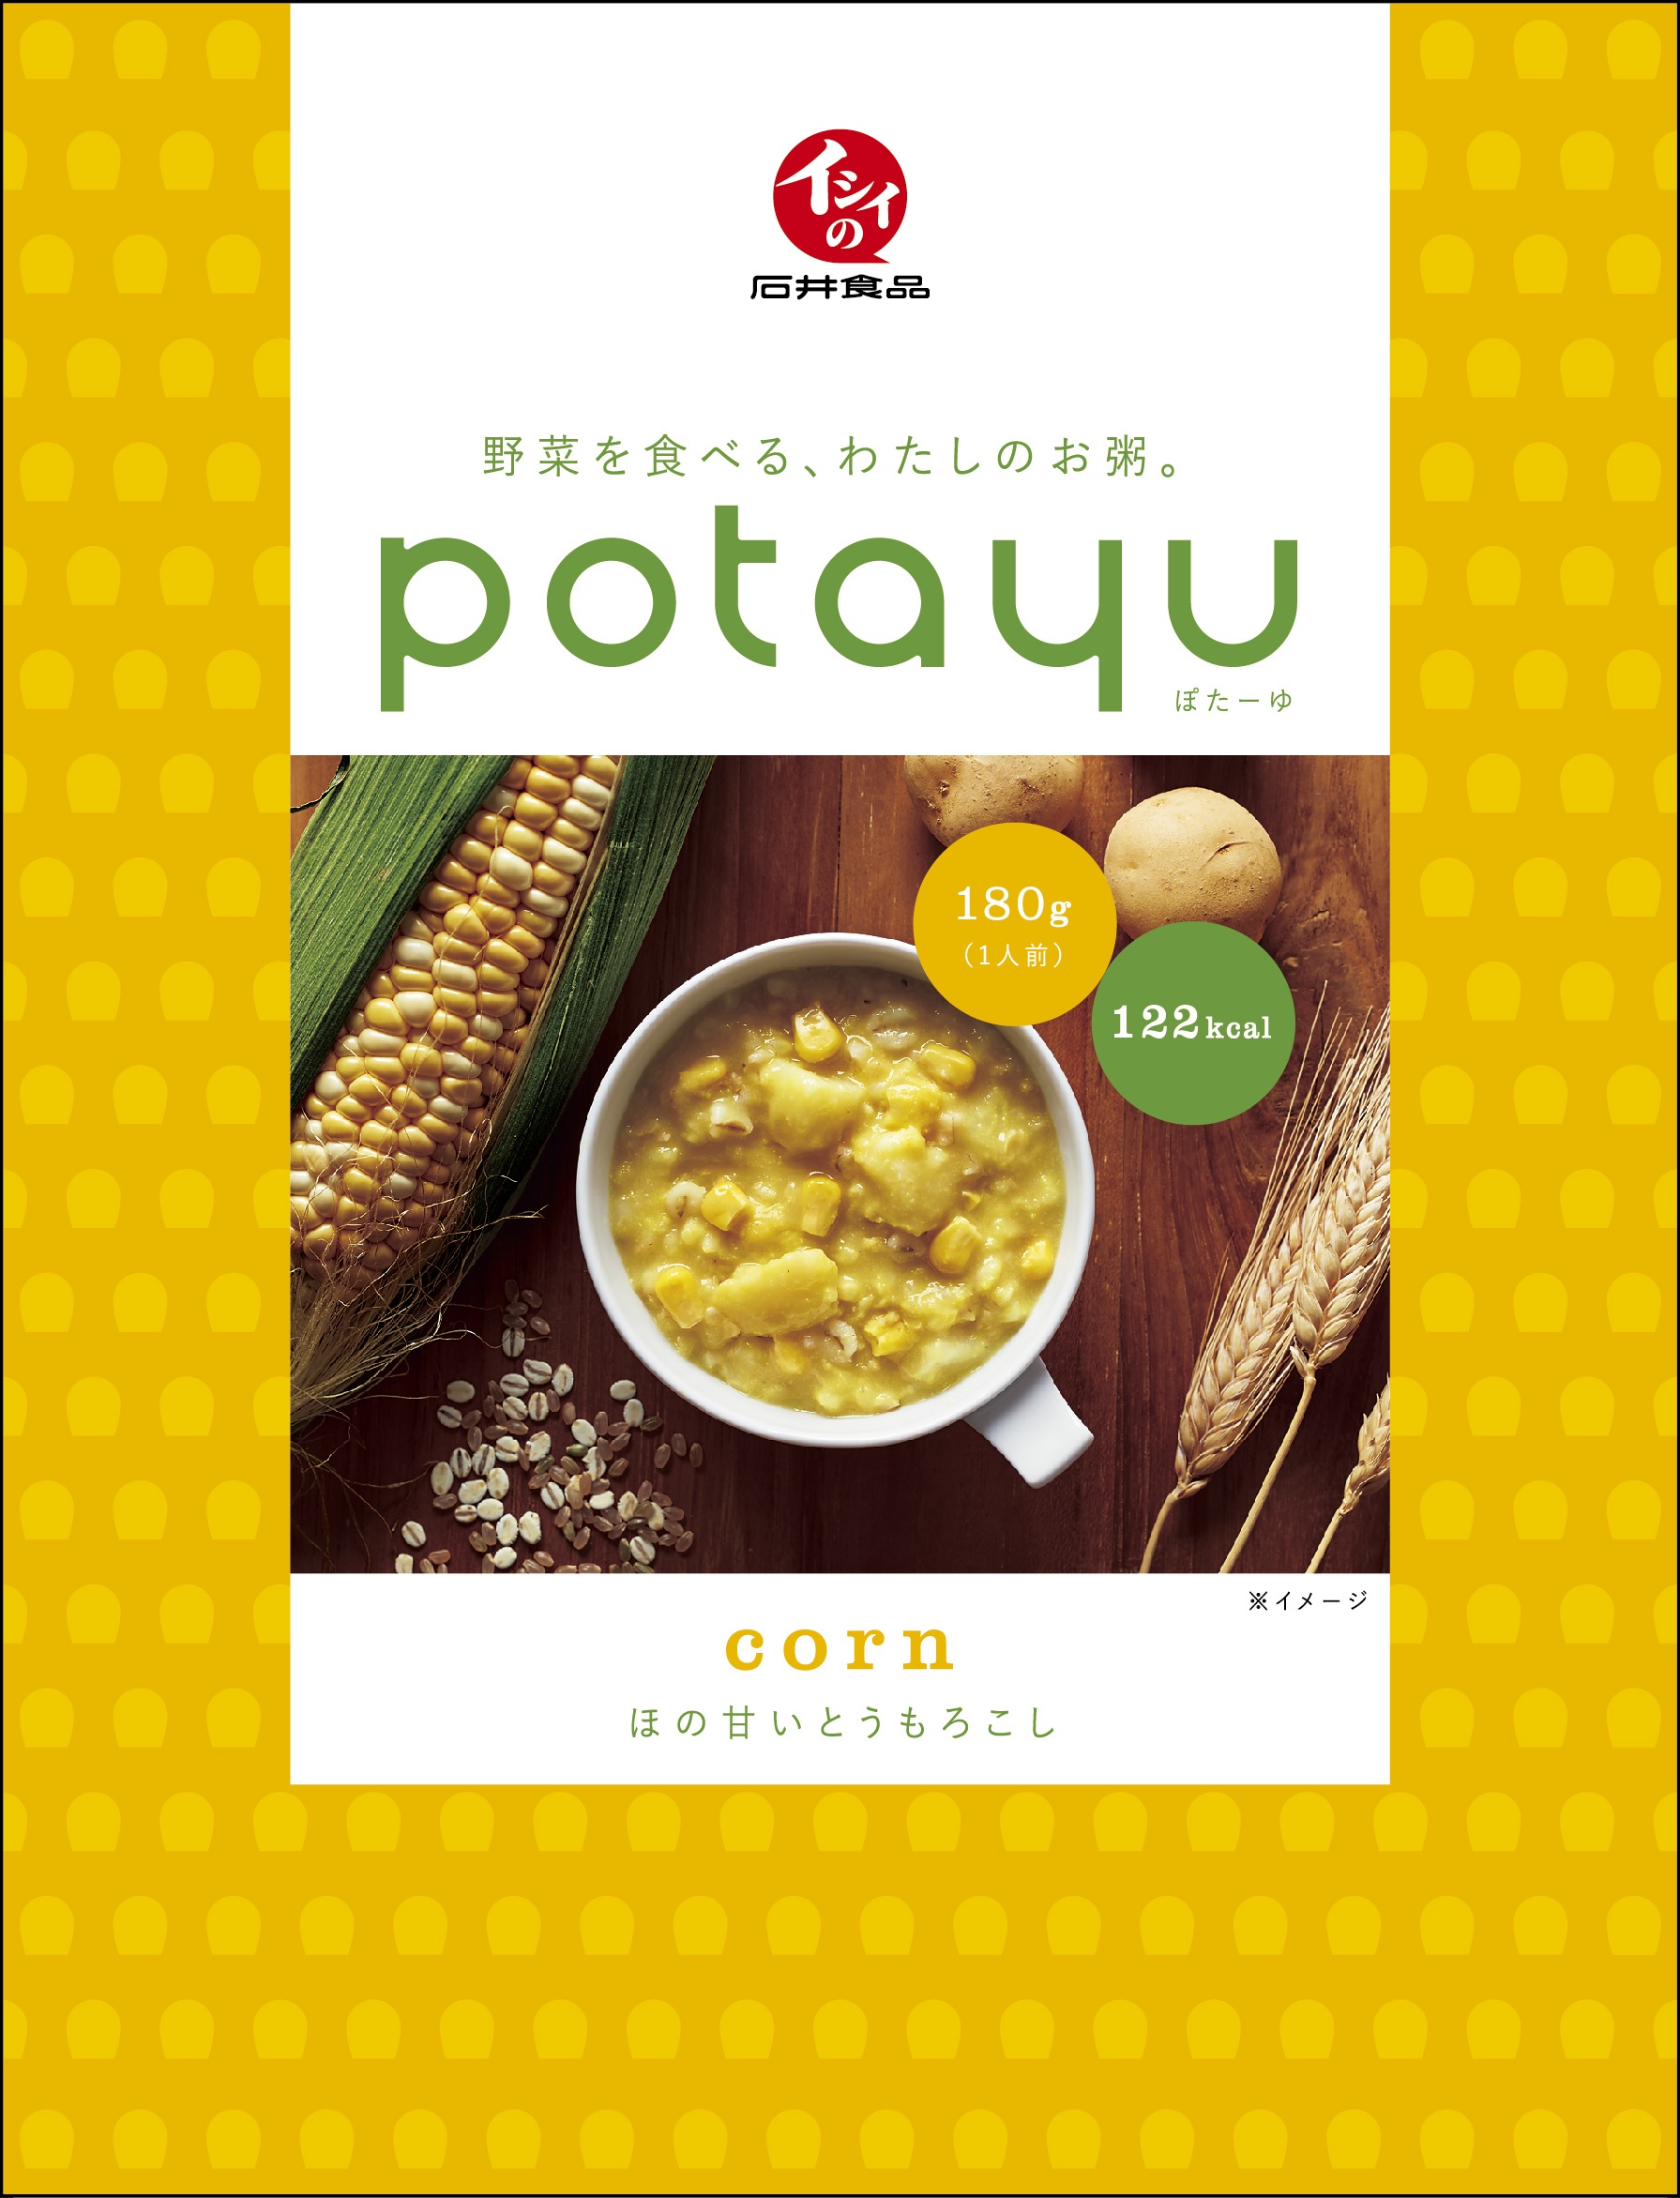 potayu corn